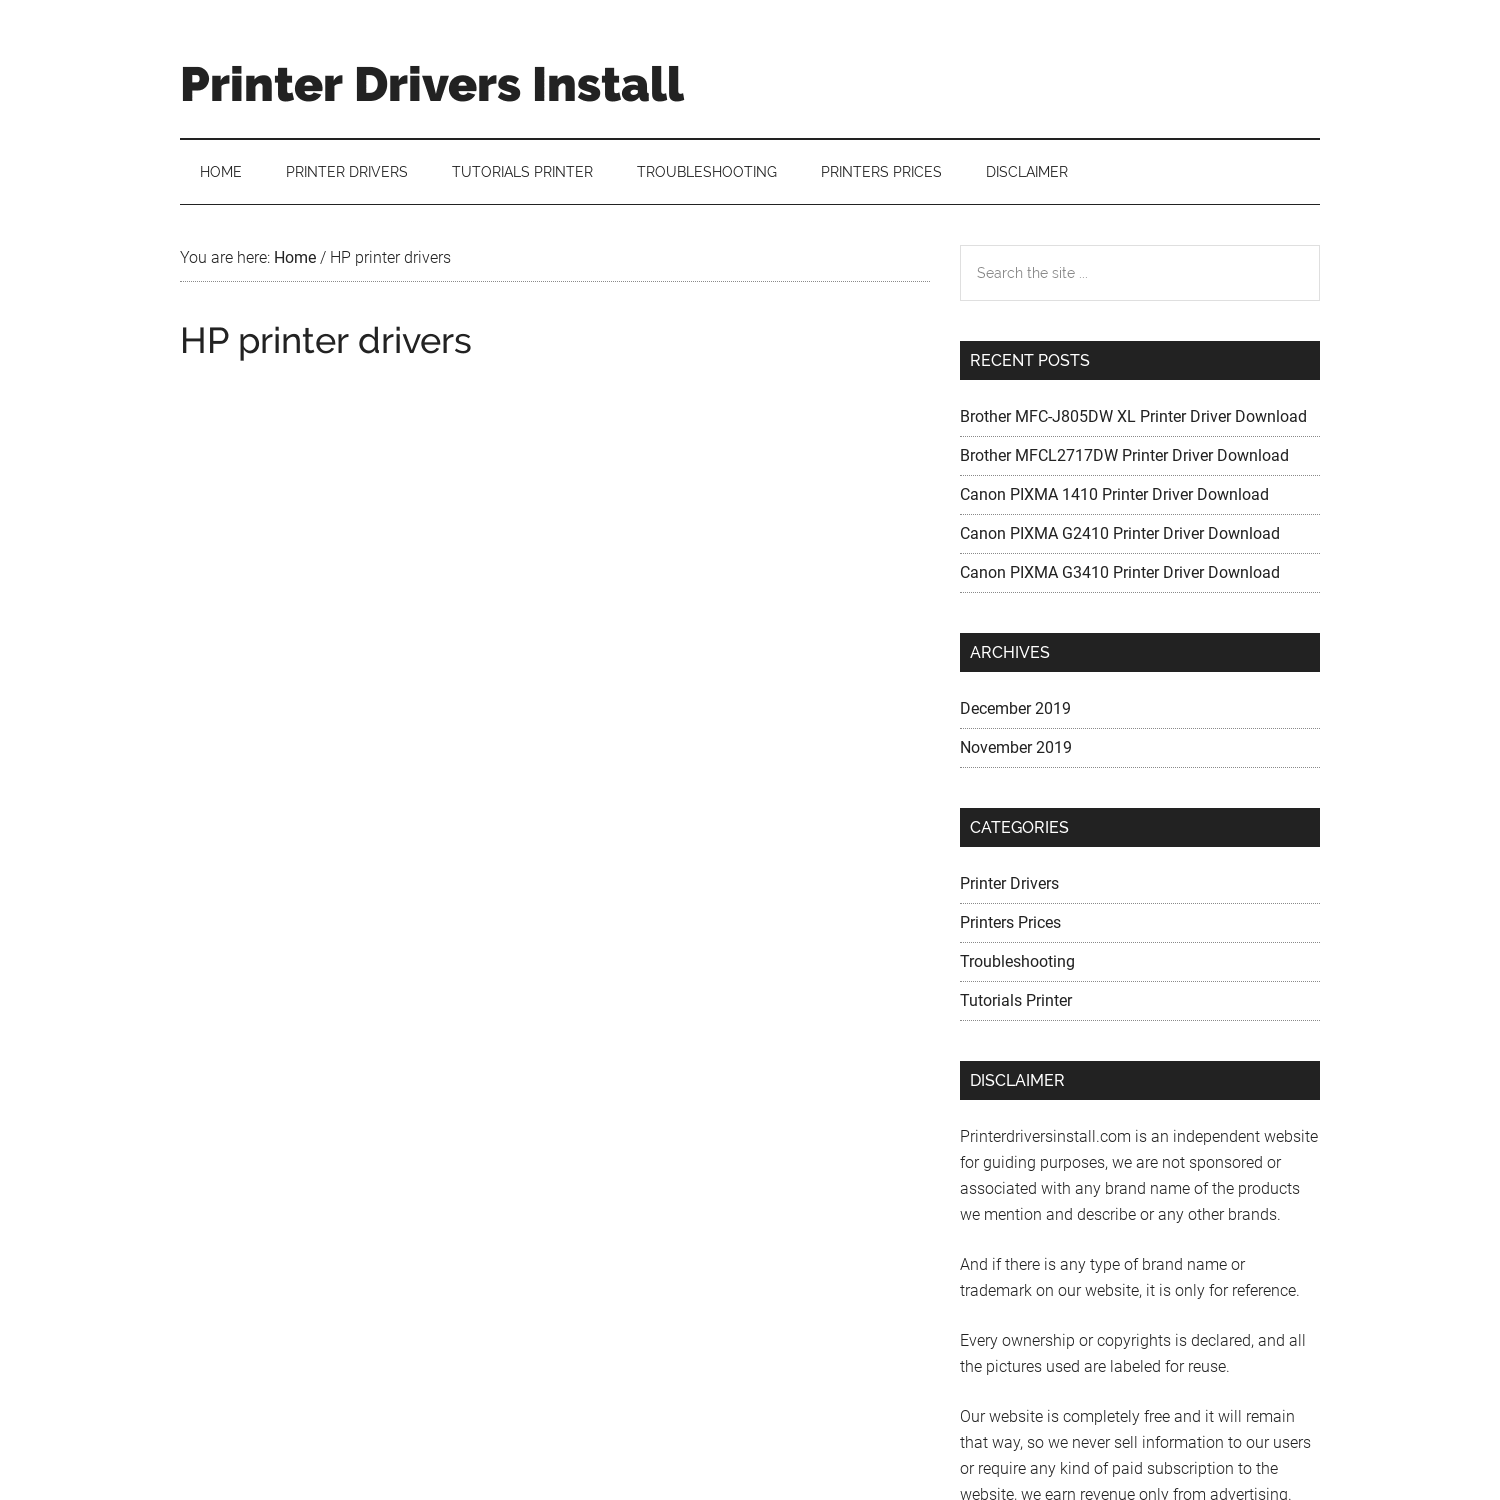 HP printer drivers - Printer Drivers Install